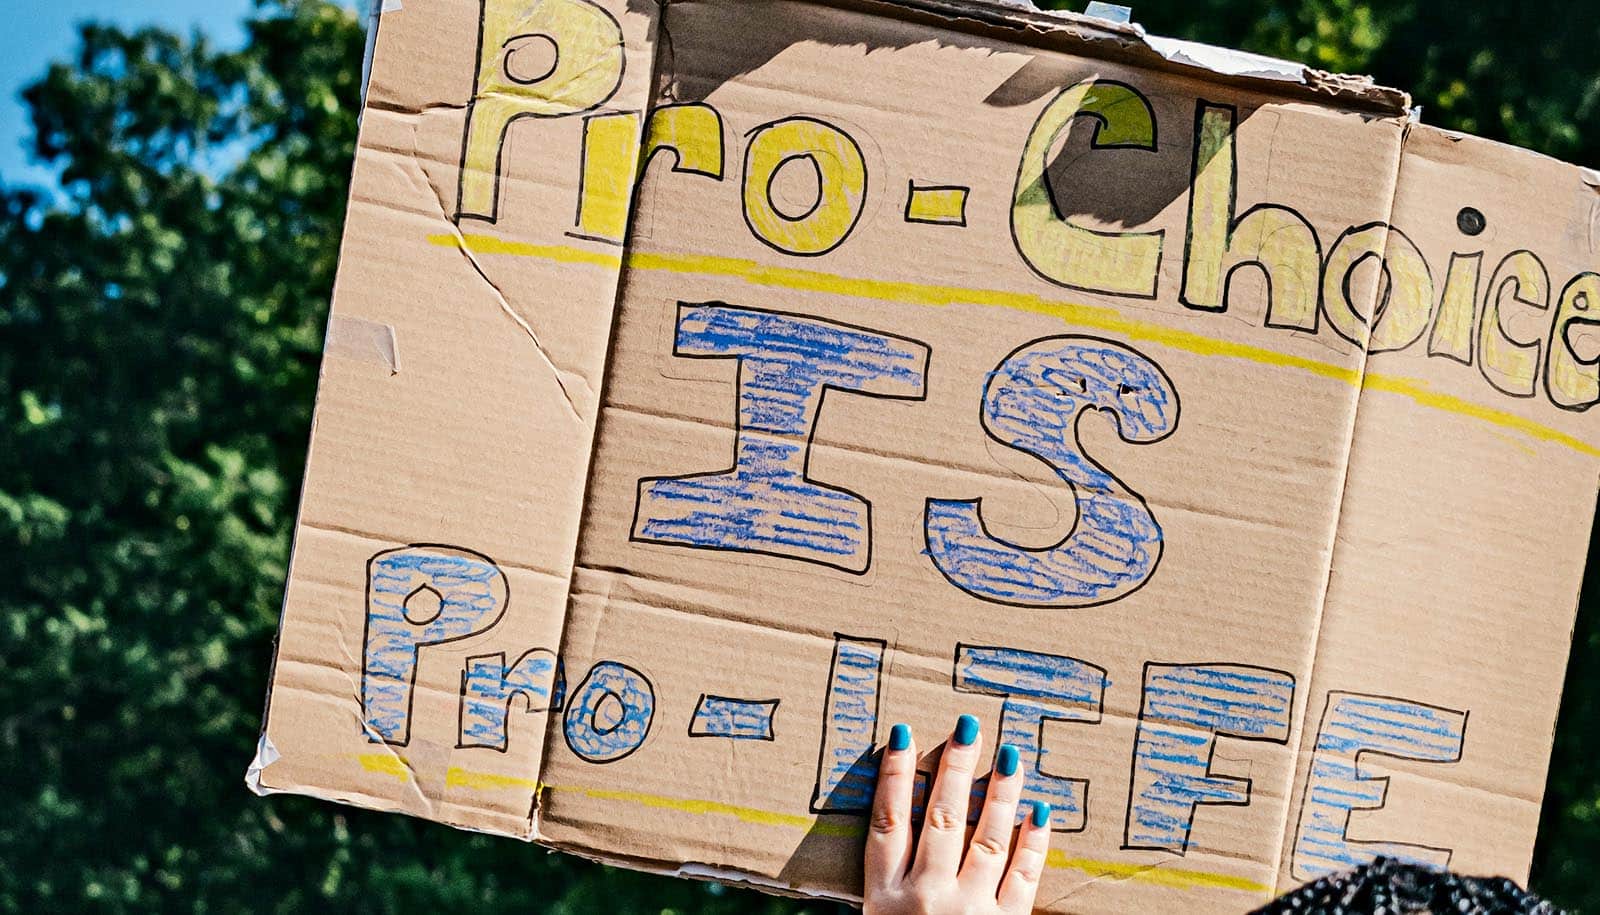 Pappschild sagt "Pro-Choice ist Pro-Life"